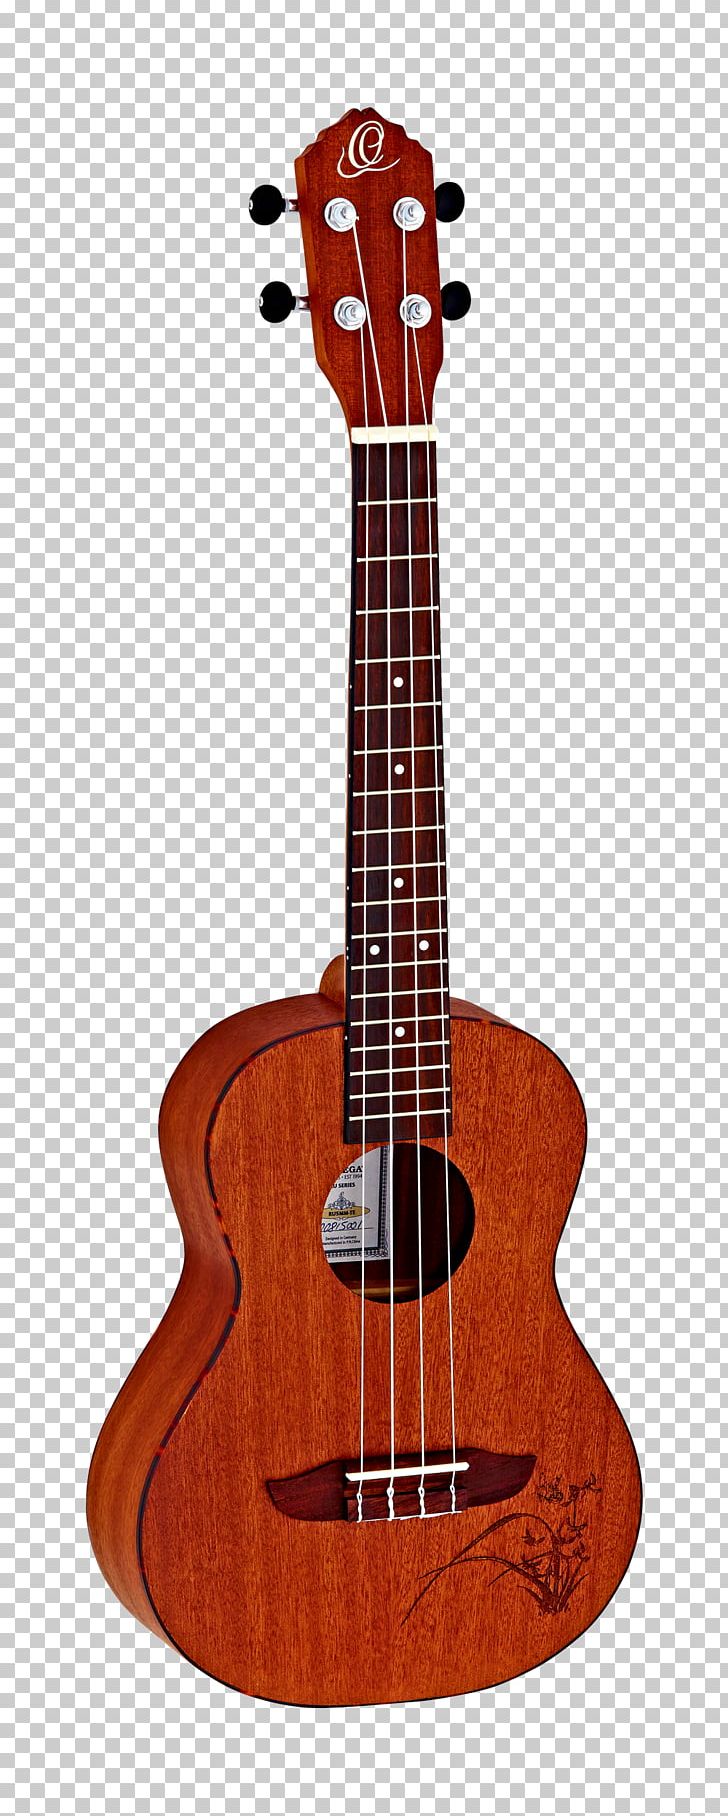 Ukulele Guitar String Instruments Musical Instruments PNG, Clipart, Acoustic Electric Guitar, Amancio Ortega, Classical Guitar, Cuatro, Guitar Accessory Free PNG Download